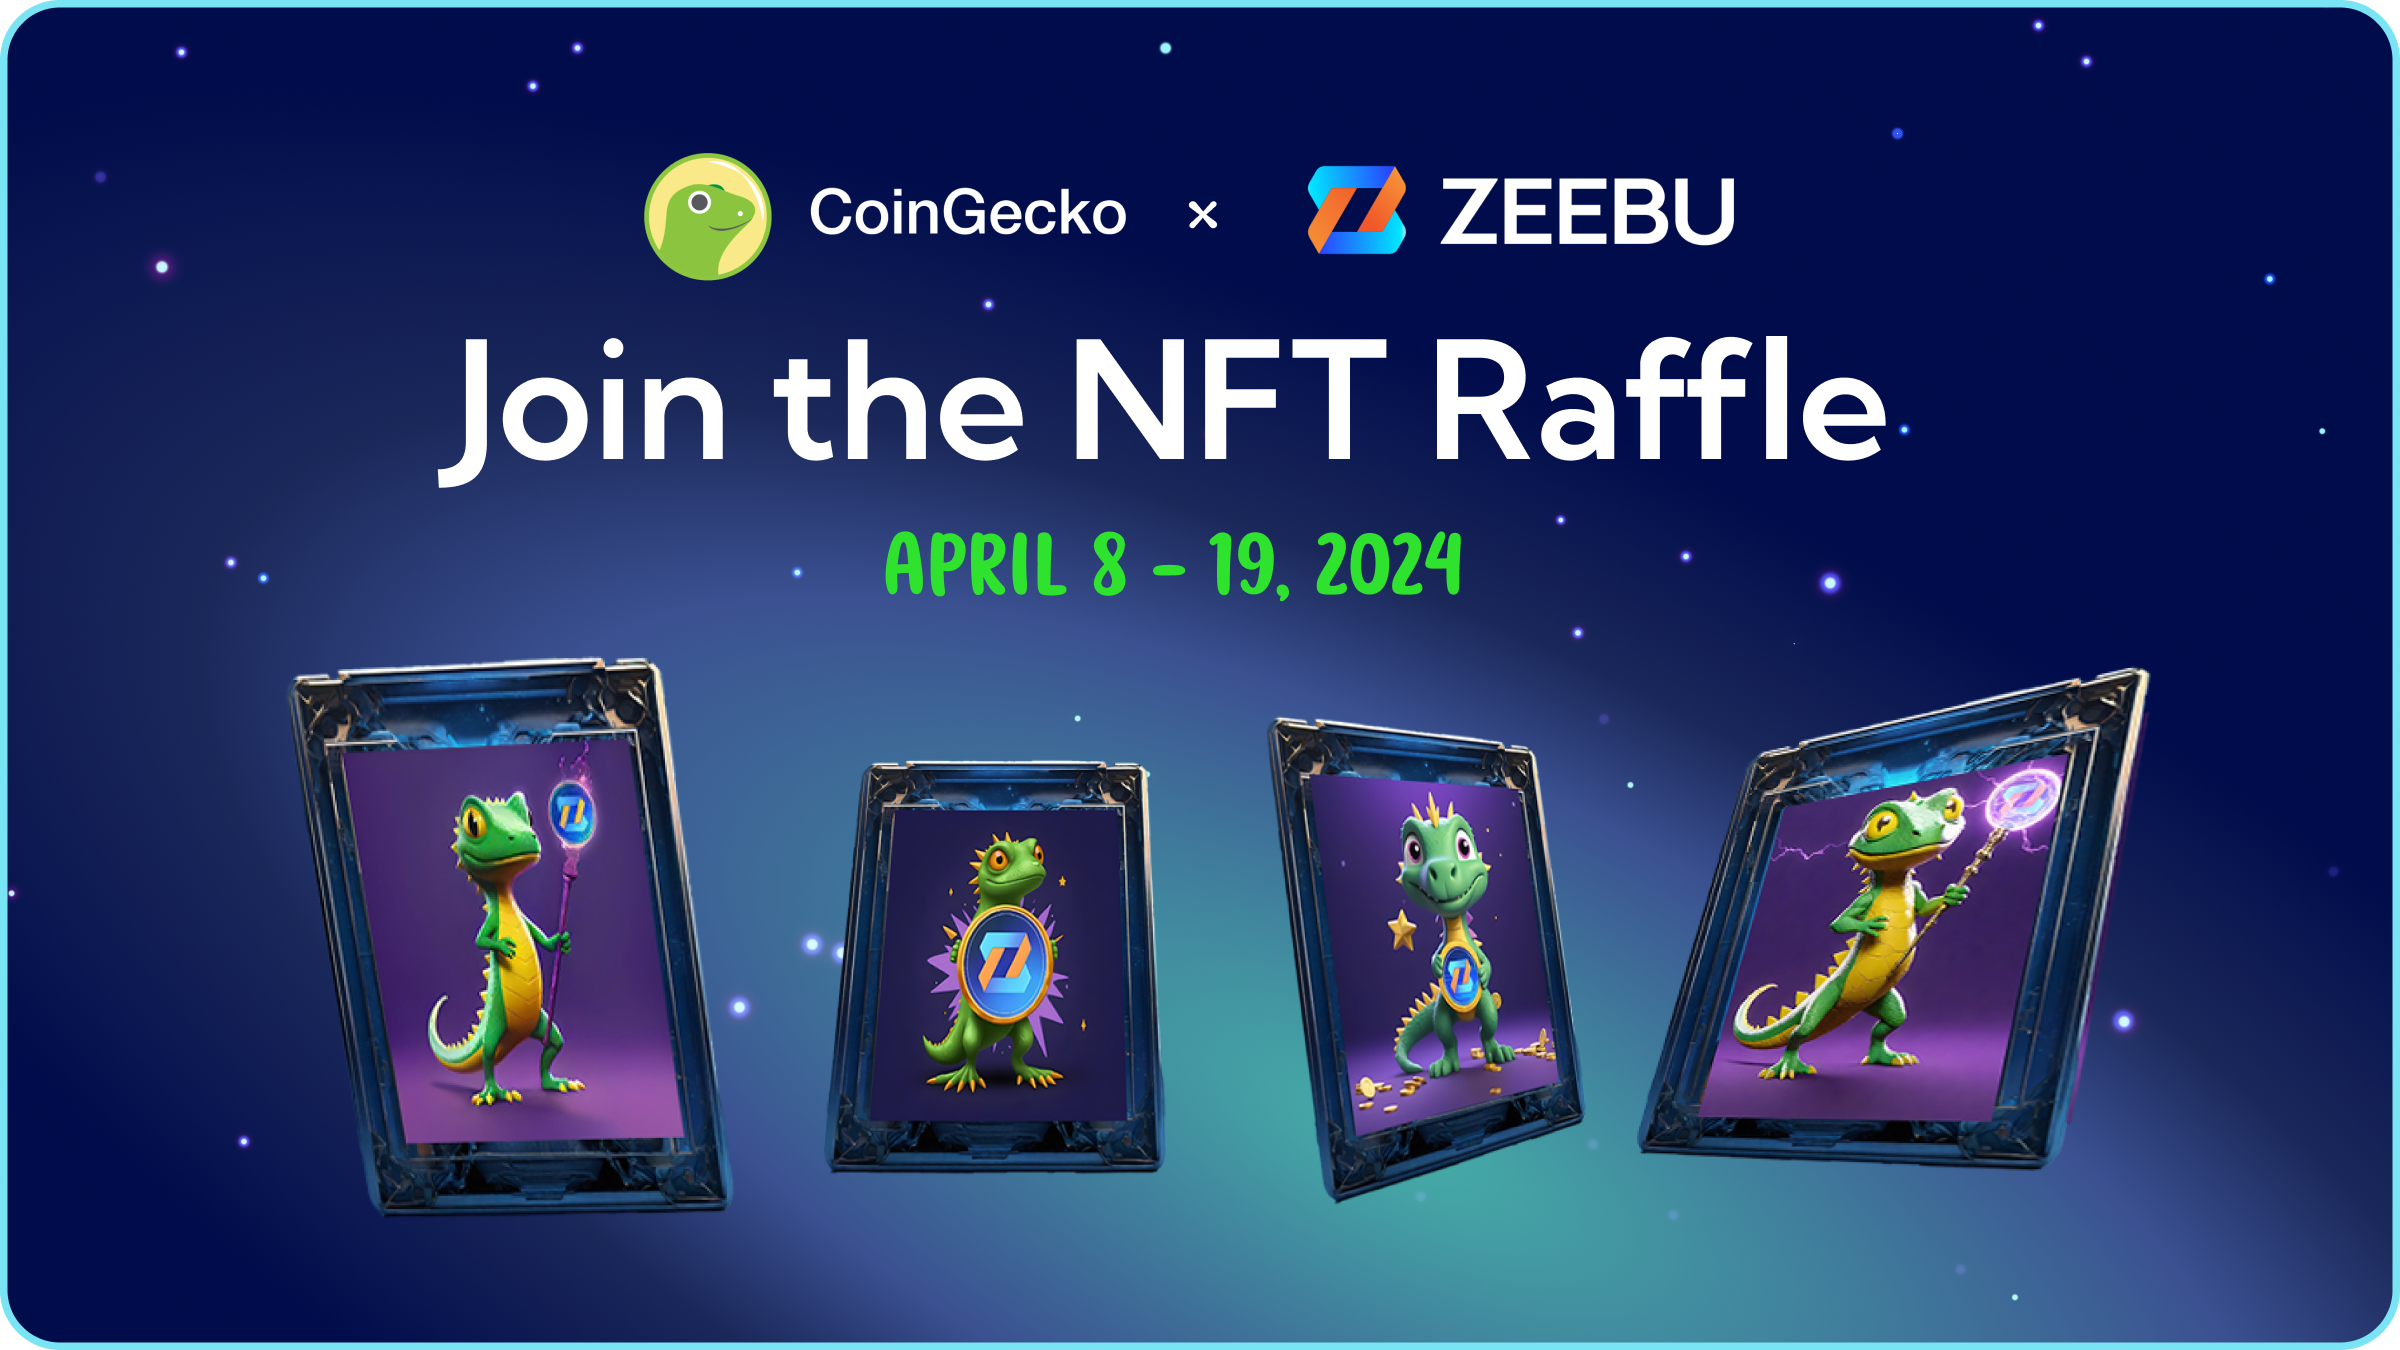 Zeebu NFT Raffle Event